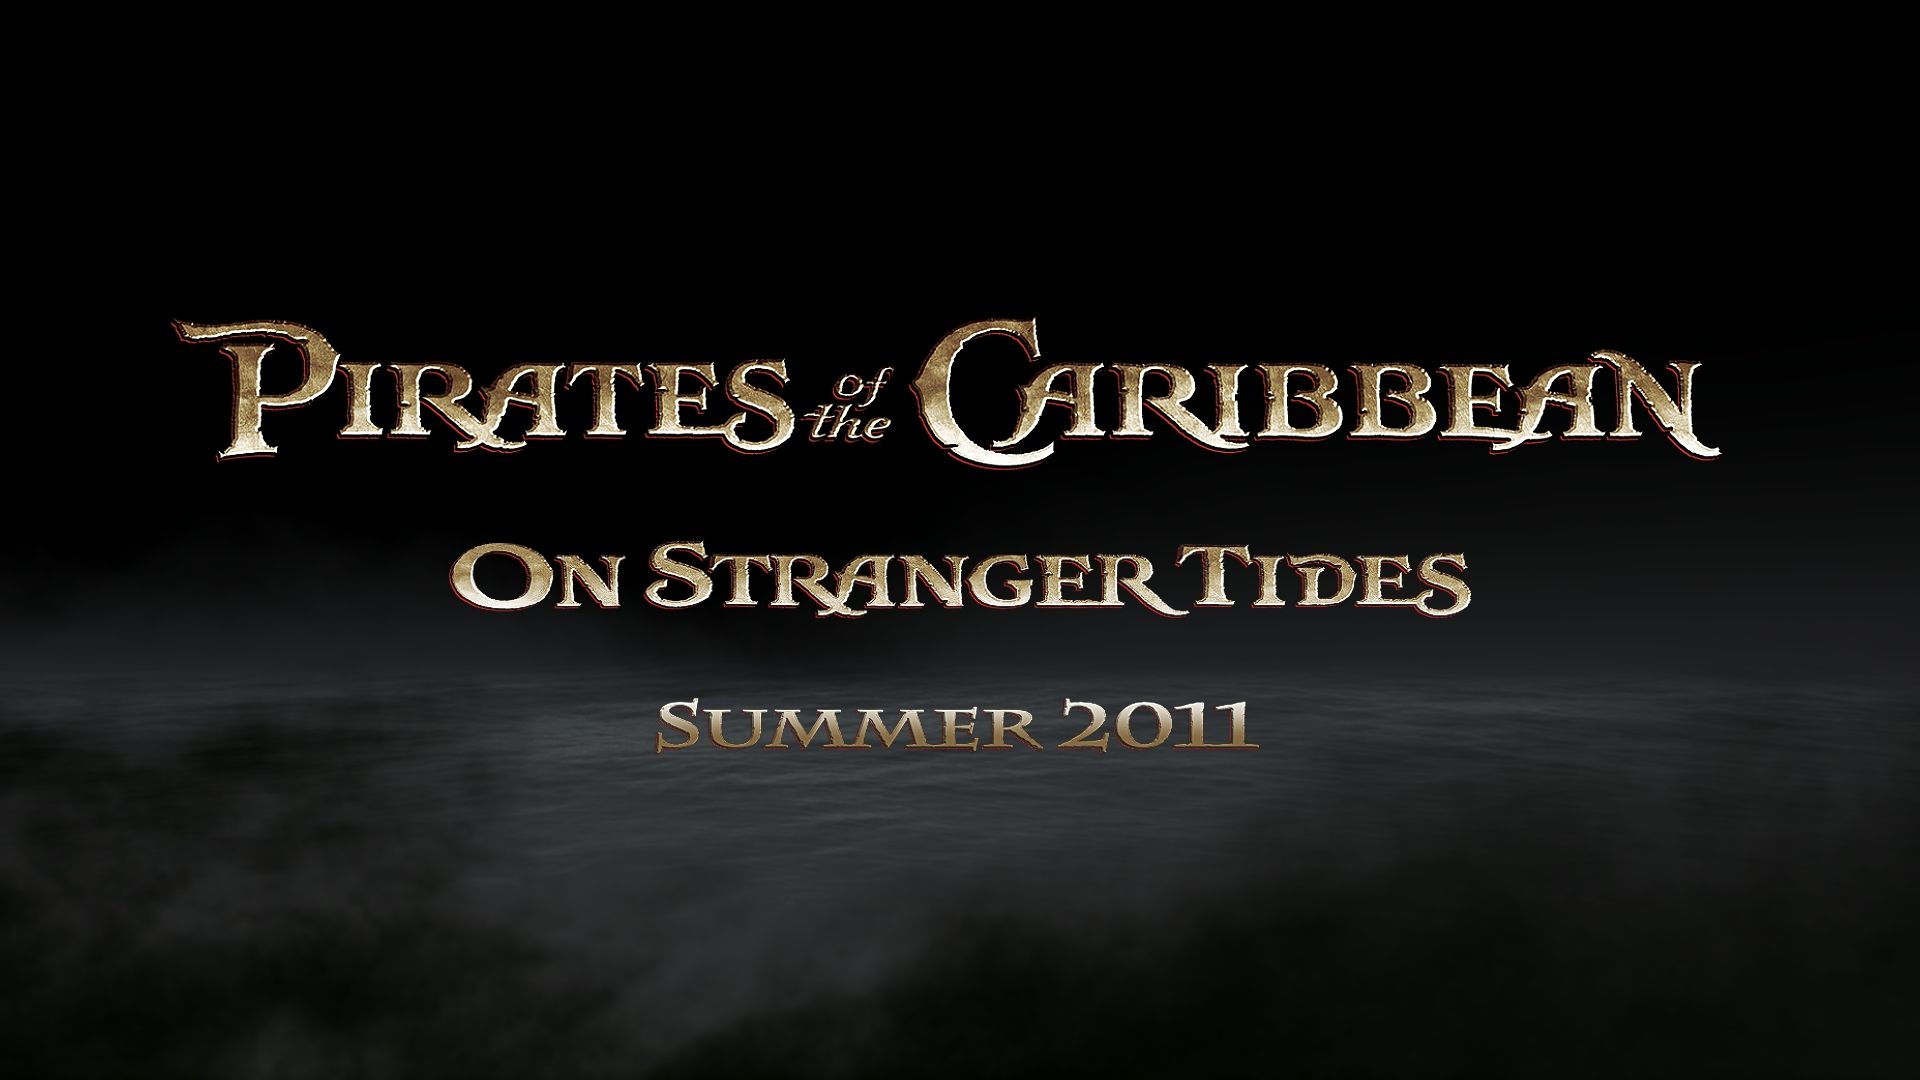 Pirates of the Caribbean: On Stranger Tides Official Artwork